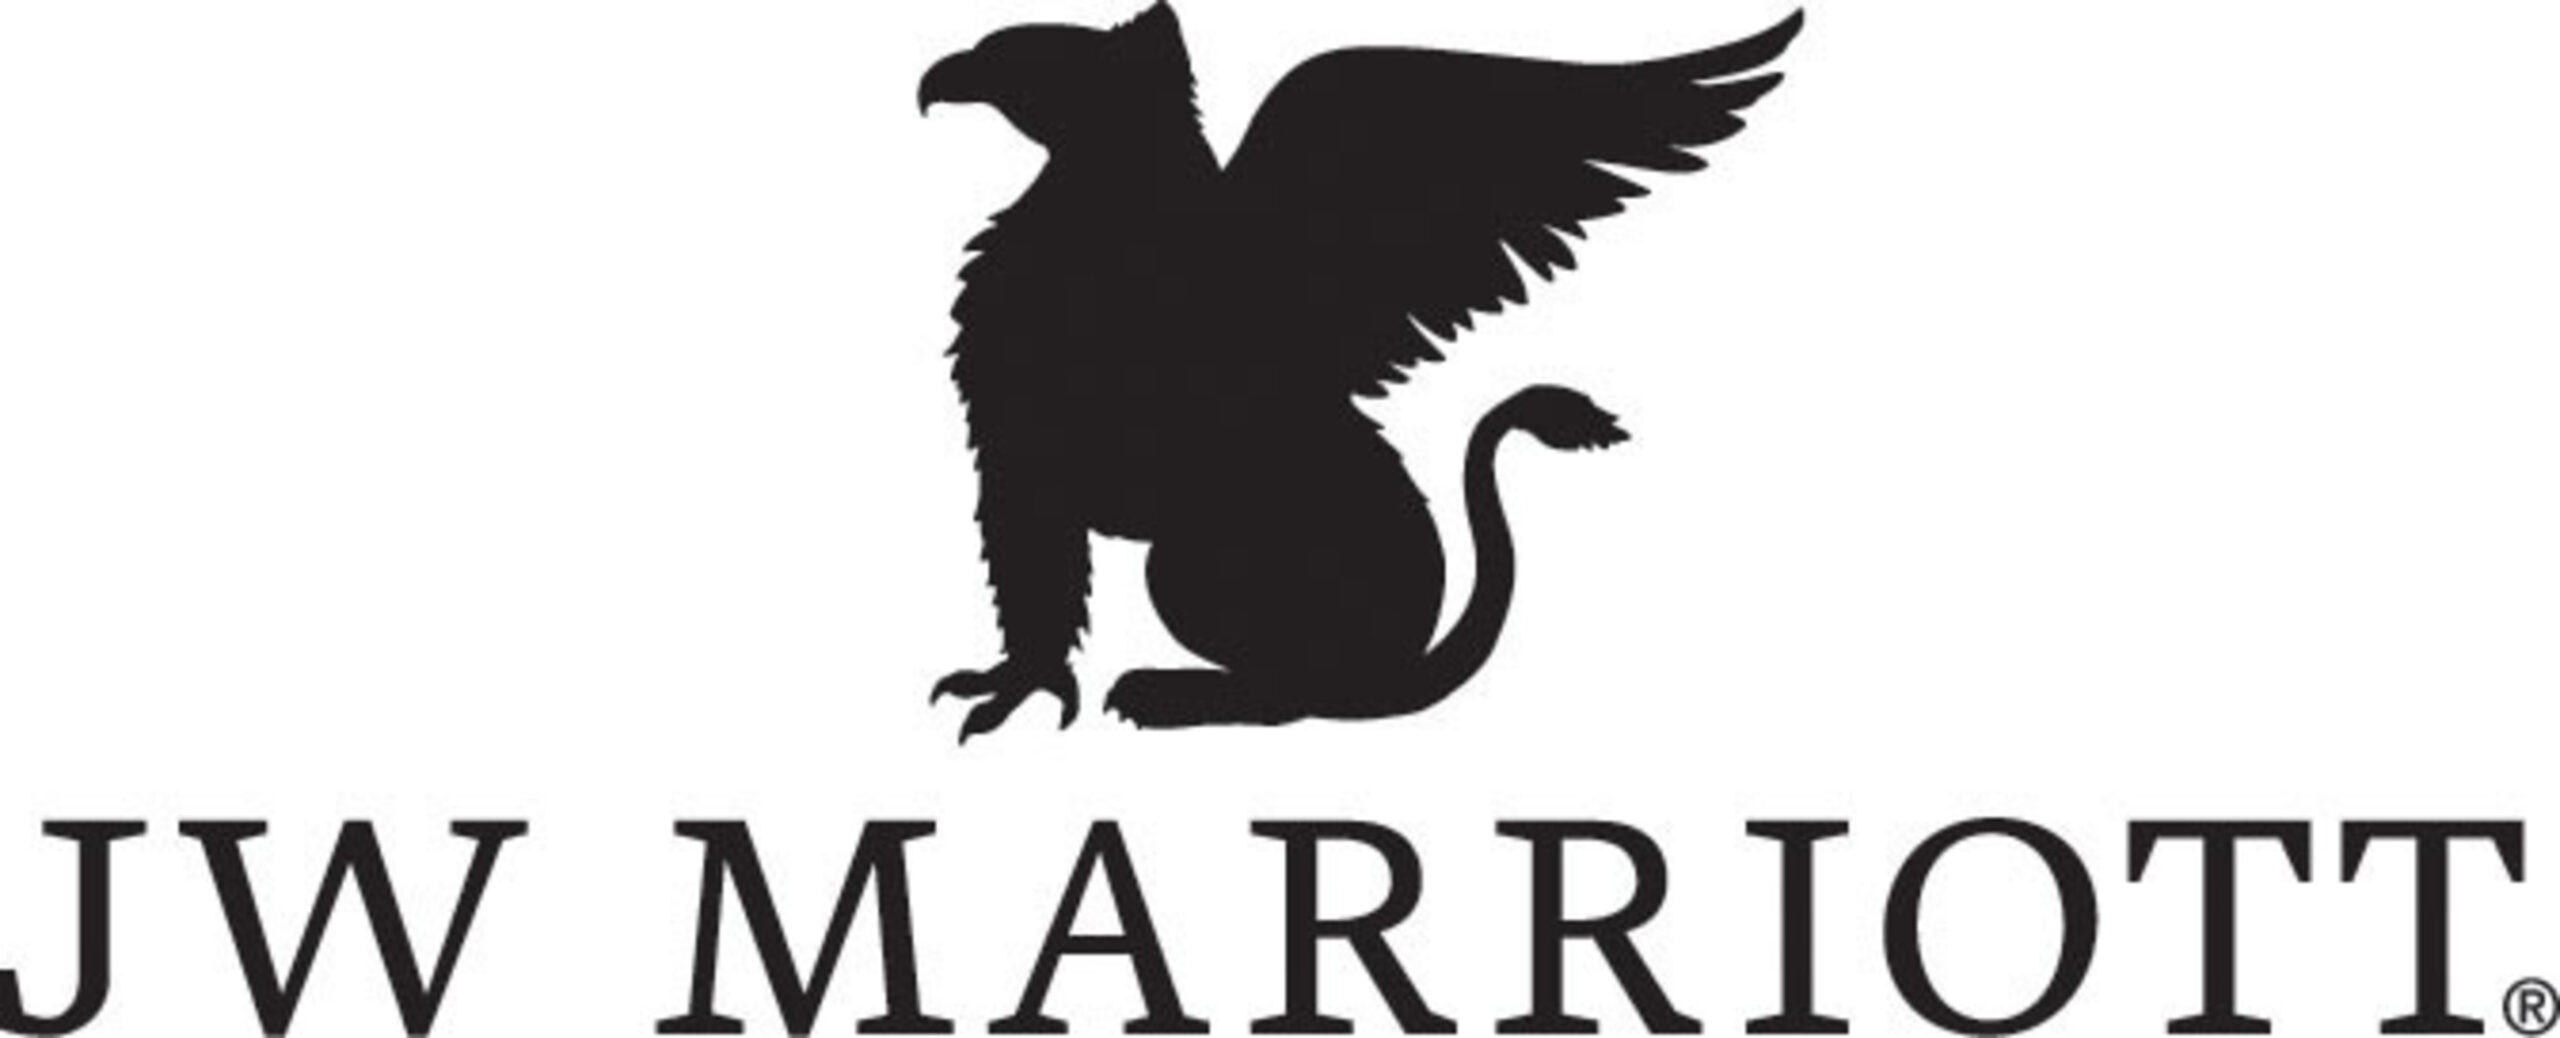 JW Marriott logo.  (PRNewsFoto/Marriott International, Inc.)